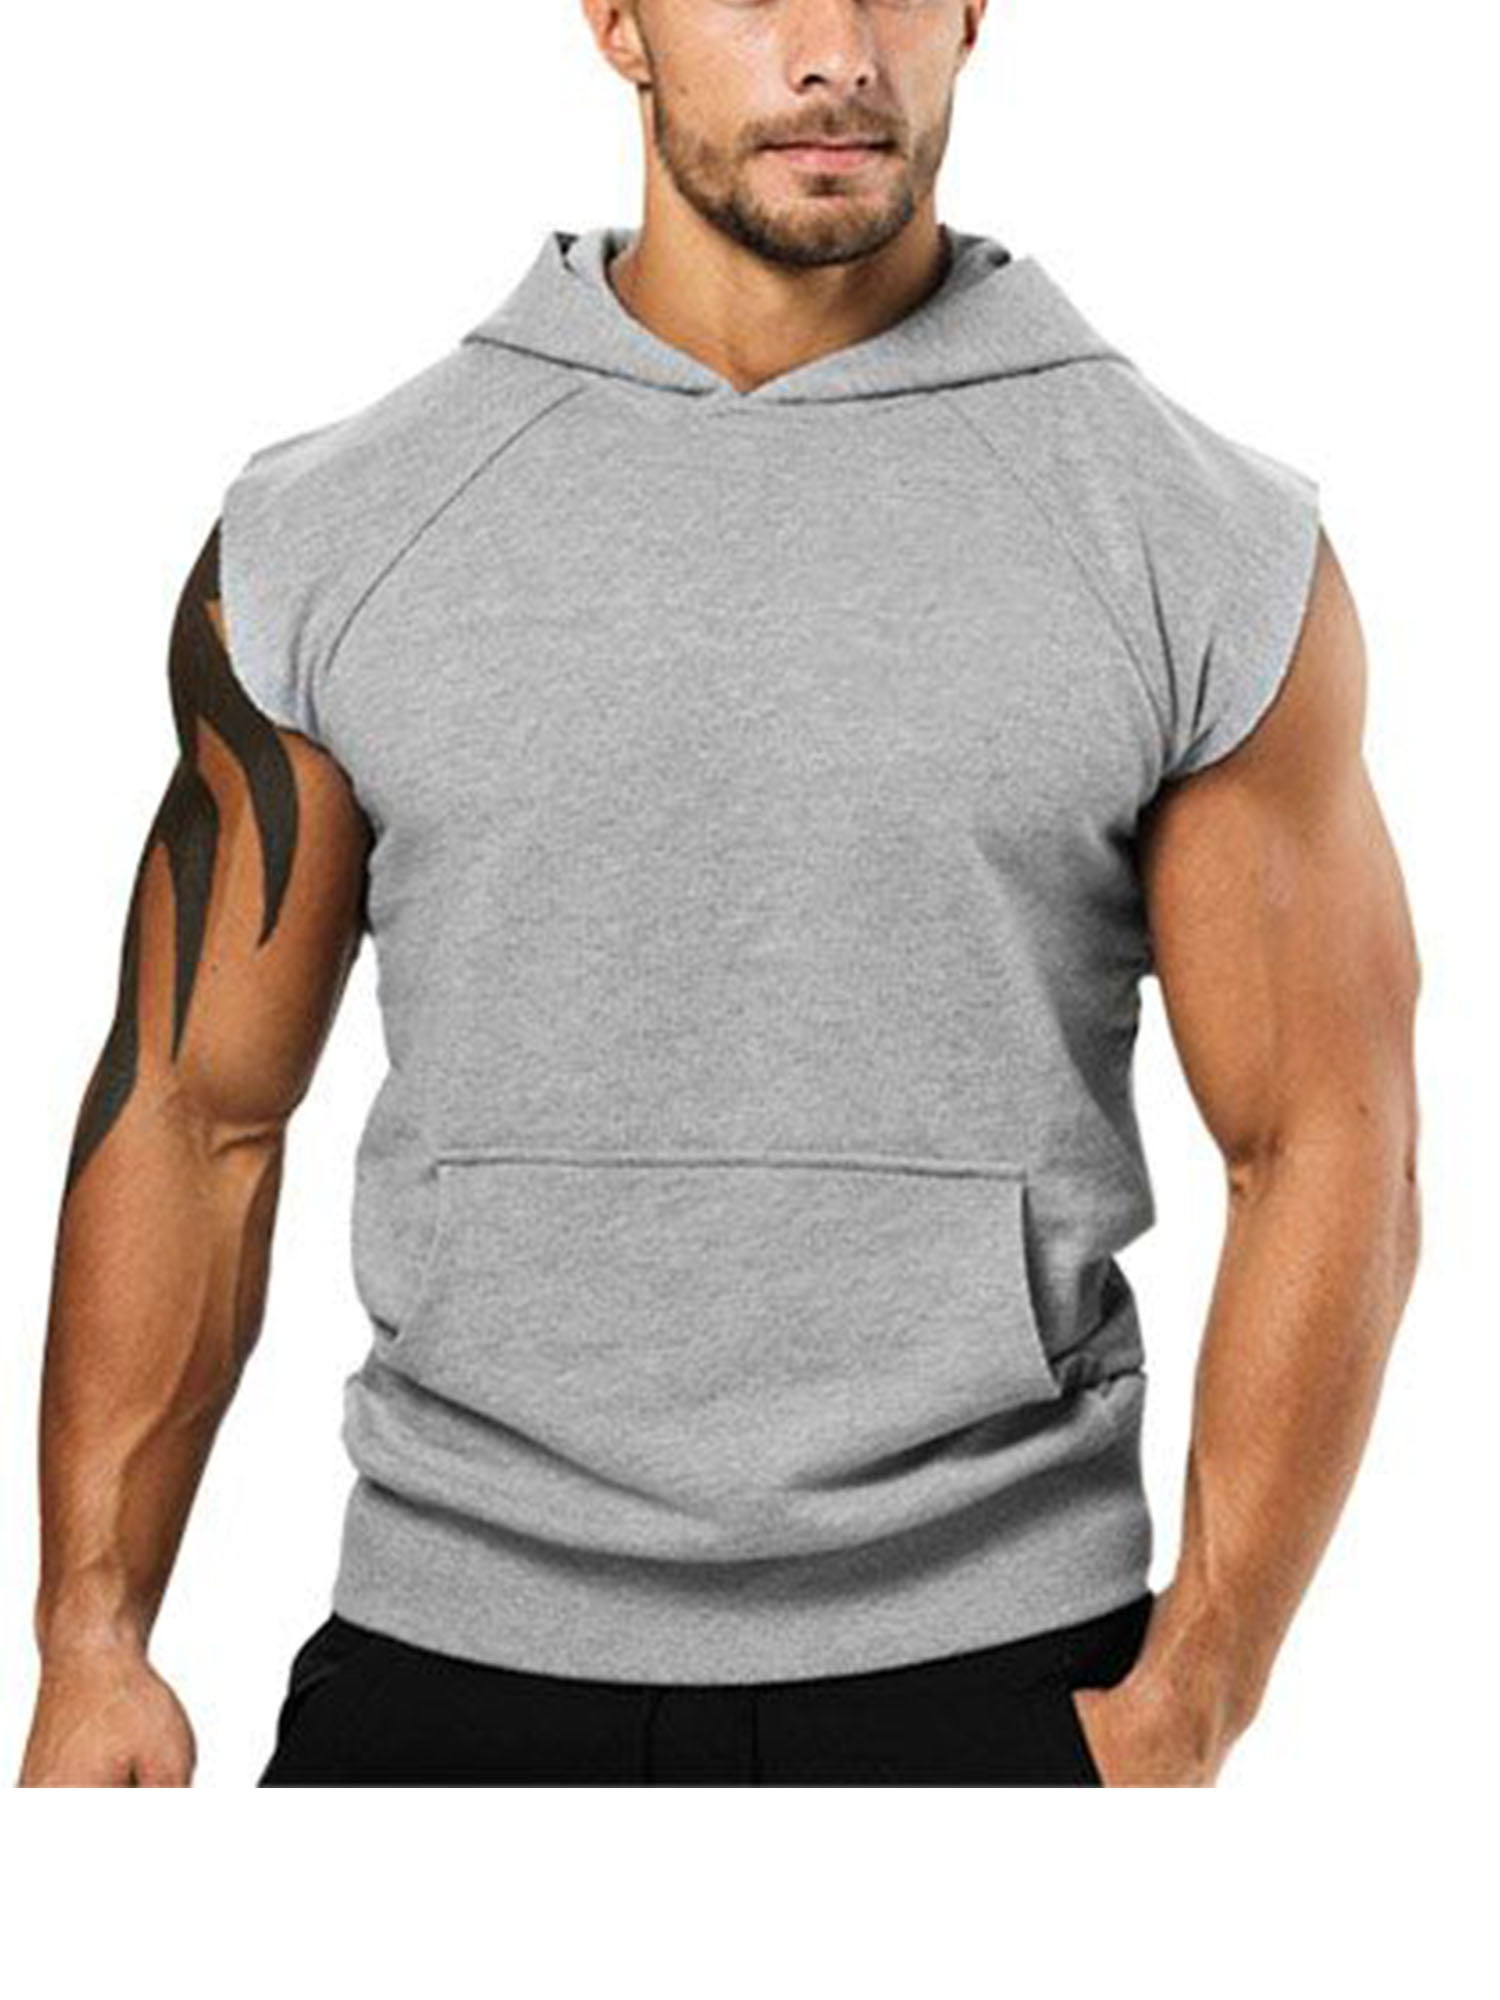 Mens Sports Short Sleeve Running Hoodies Gym T Shirts Bodybuilding Tops